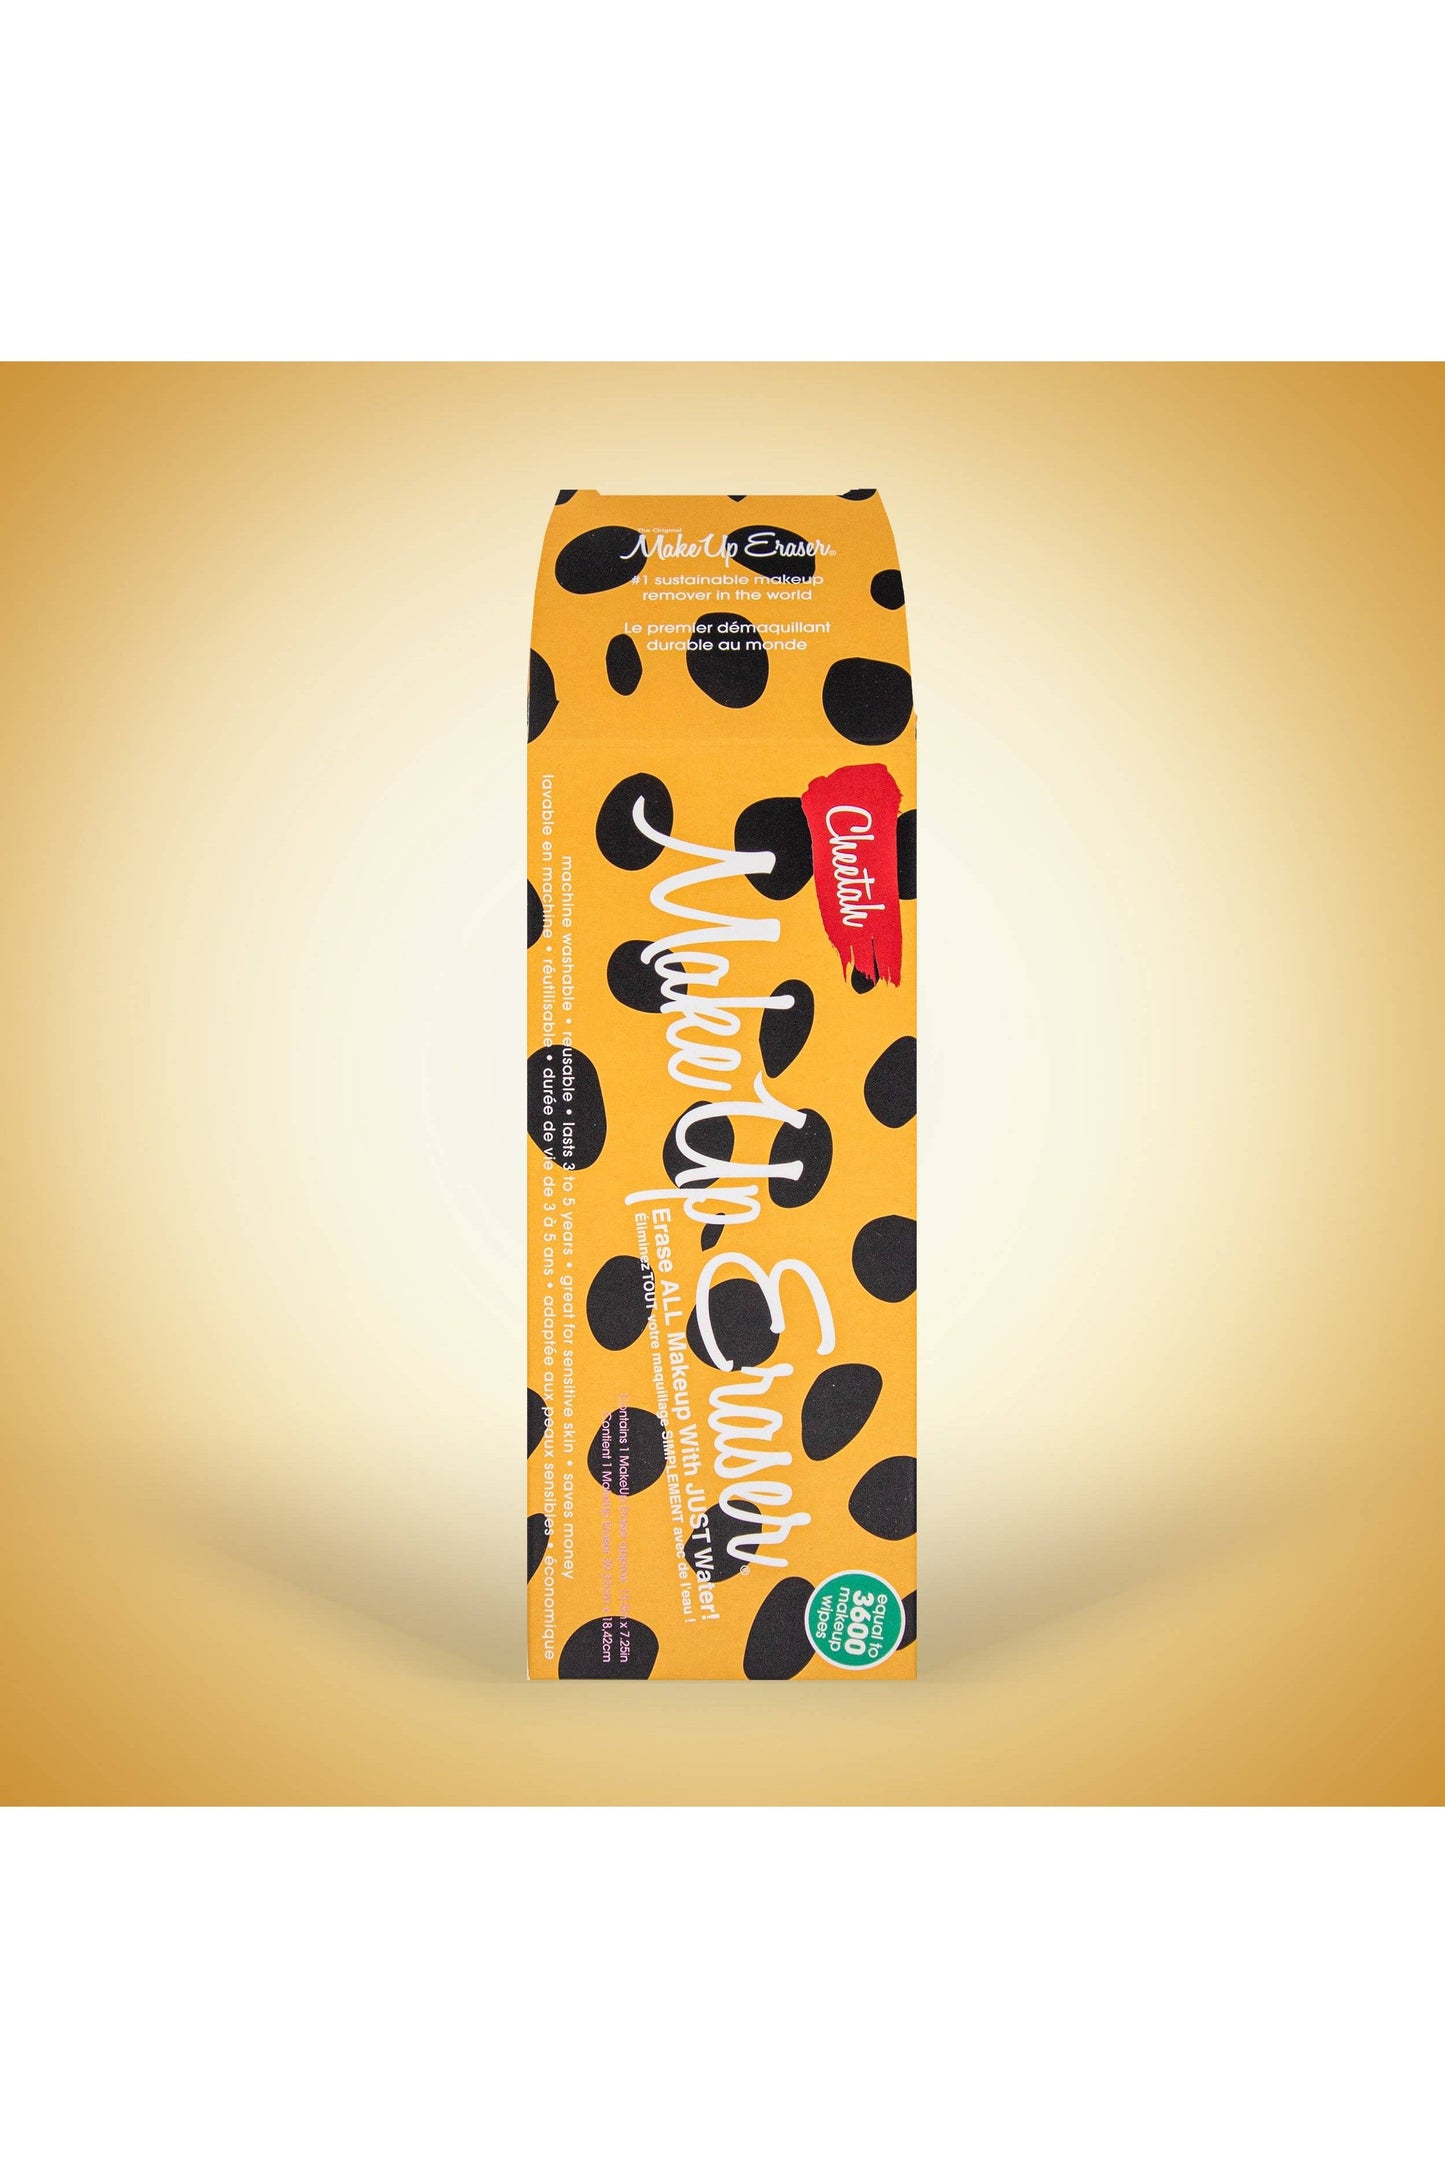 MakeUp Eraser | Cheetah Print-Accessories-MakeUp Eraser-Revive Boutique